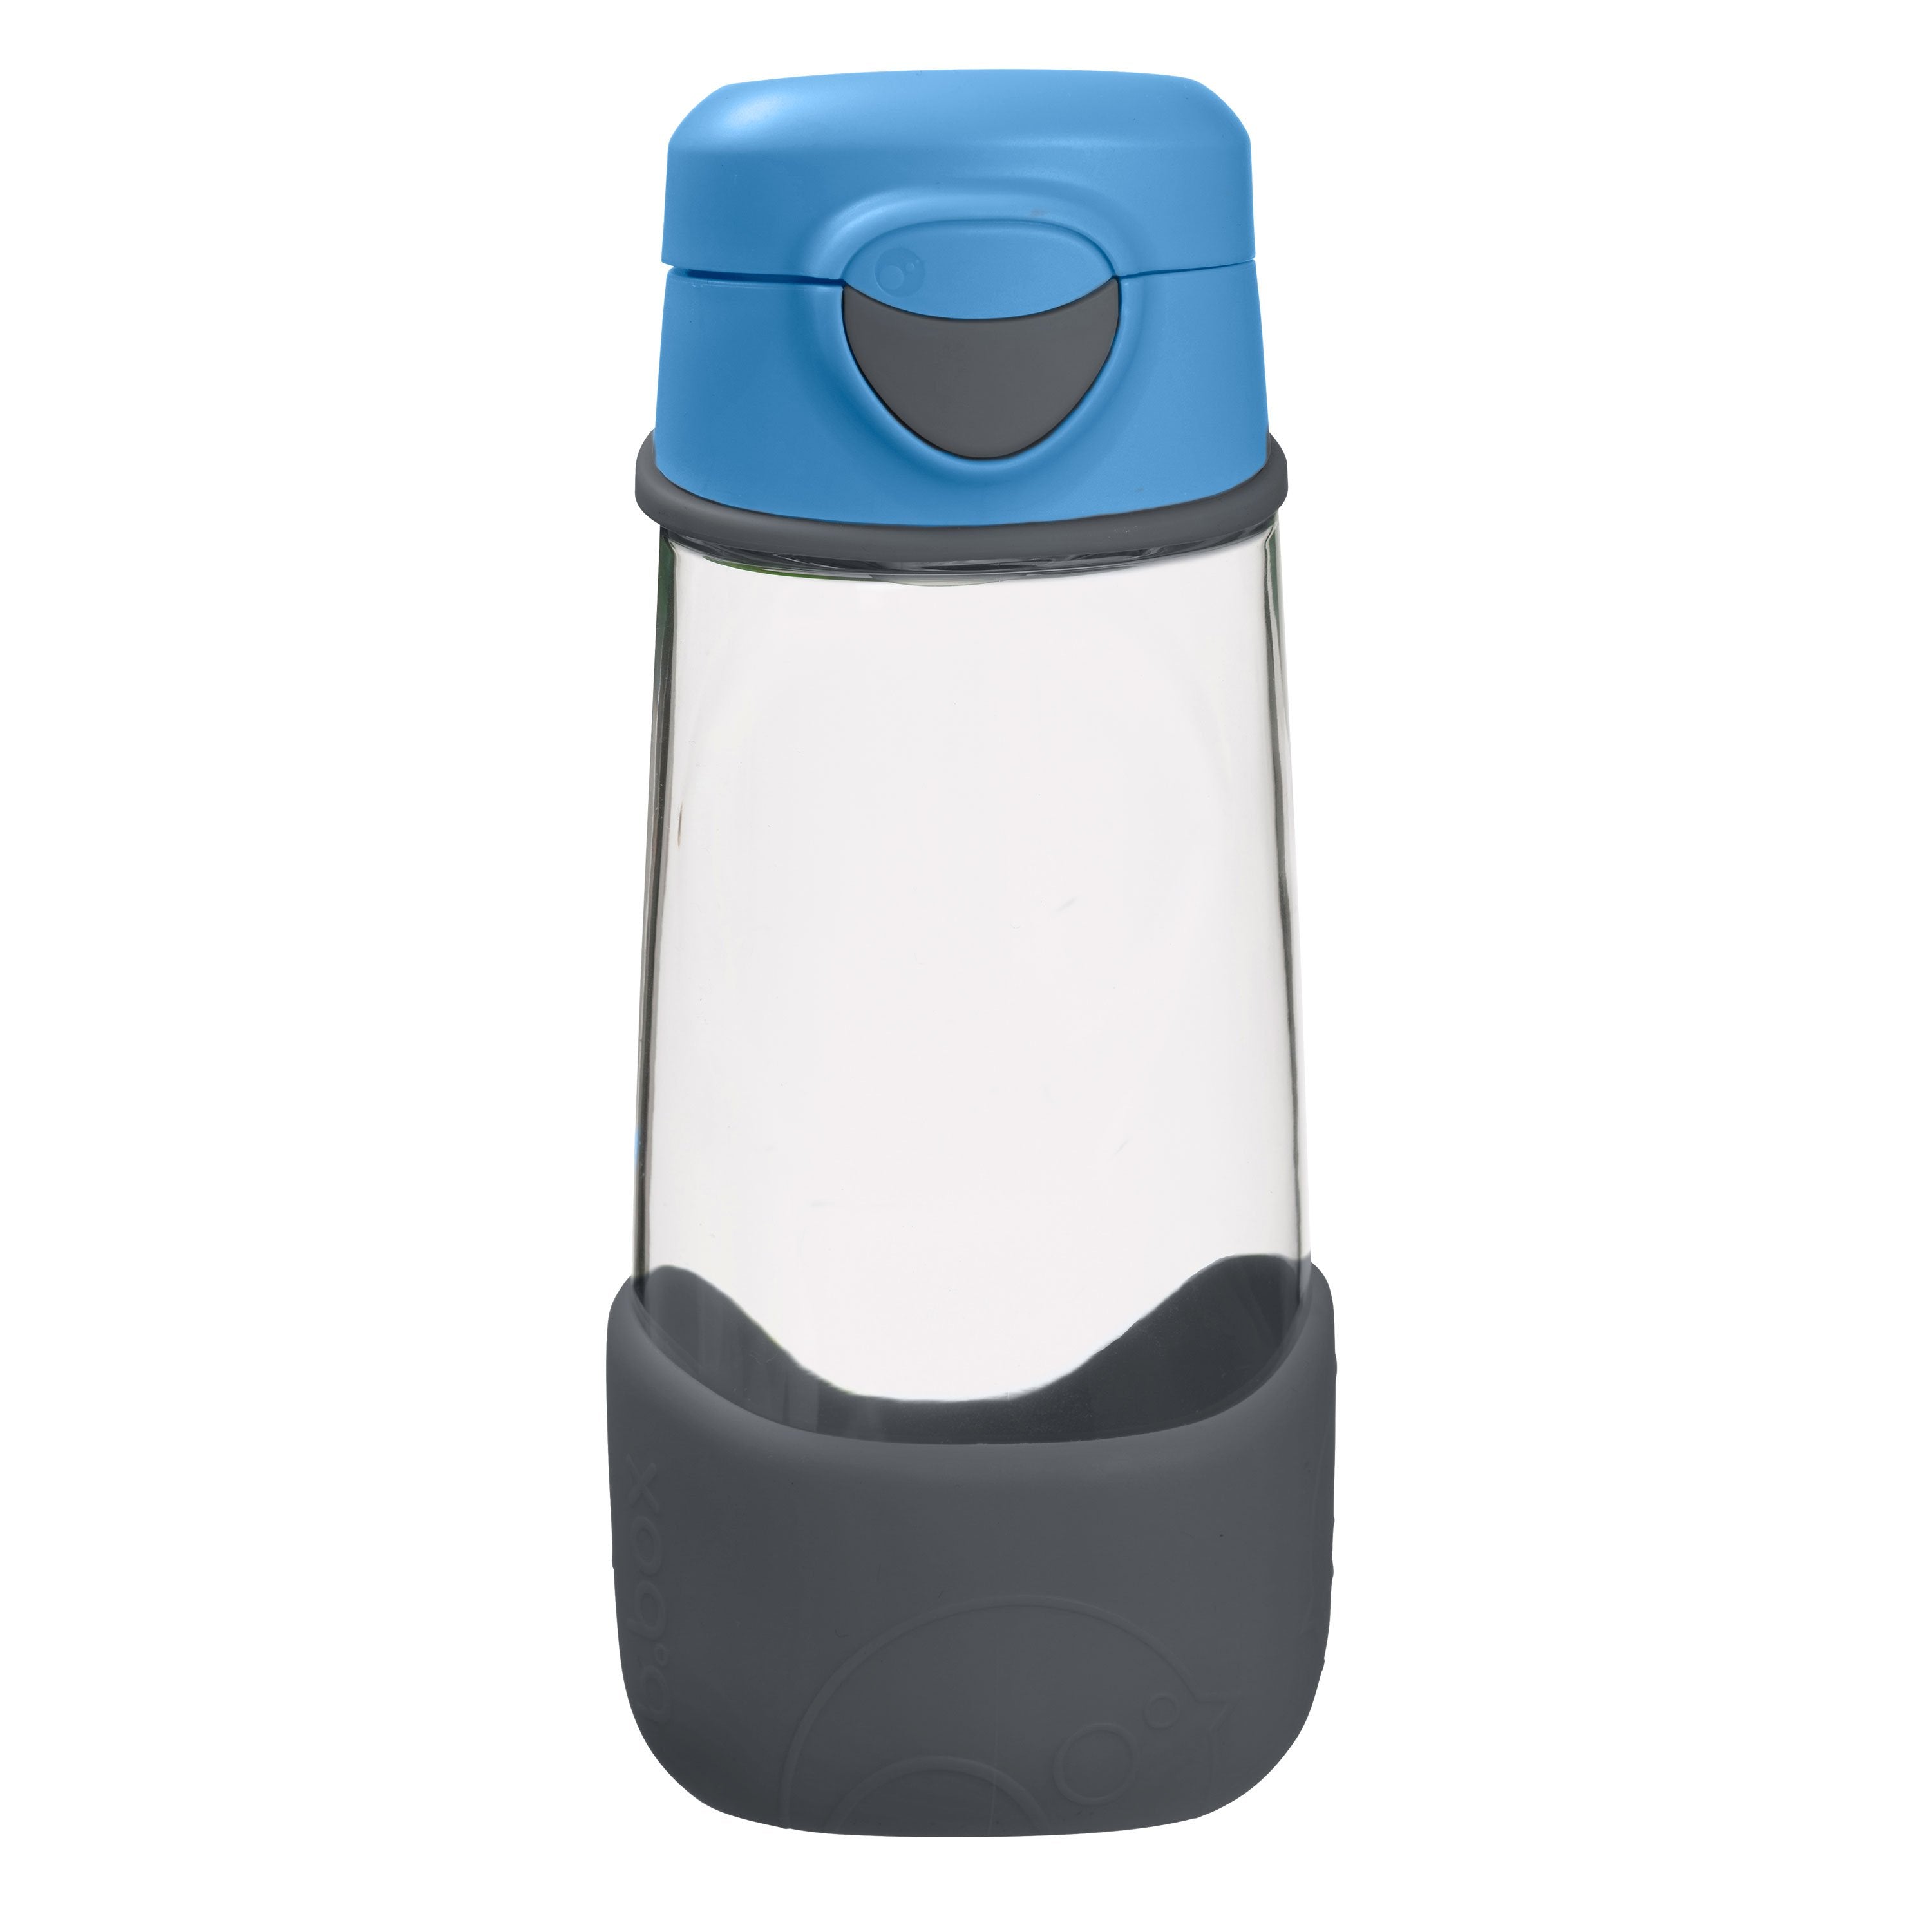 b.box Mini Lunchbox & 15oz Tritan Straw Water Bottle